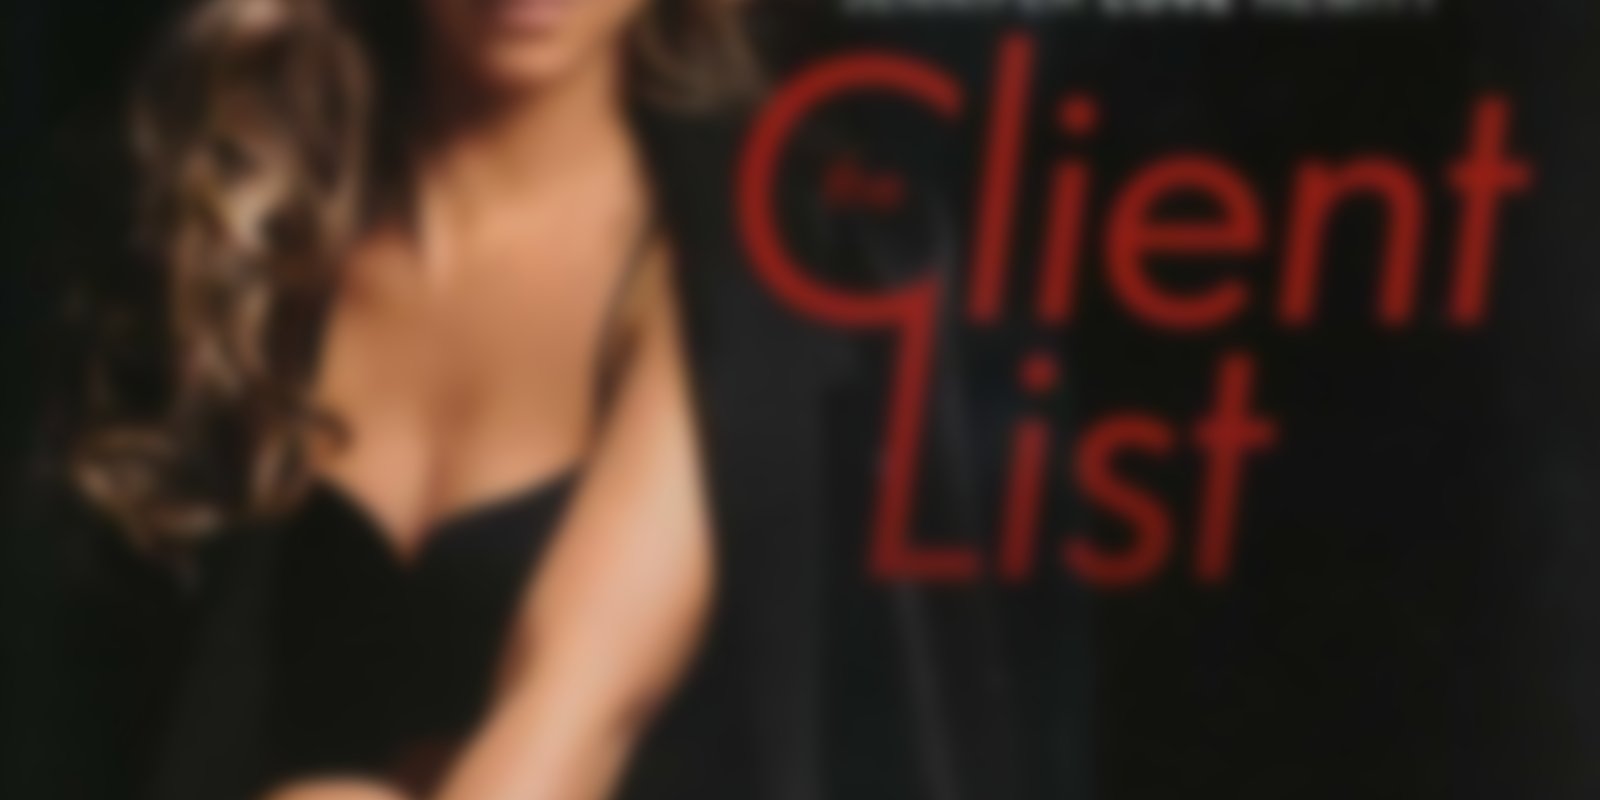 The Client List - Staffel 1